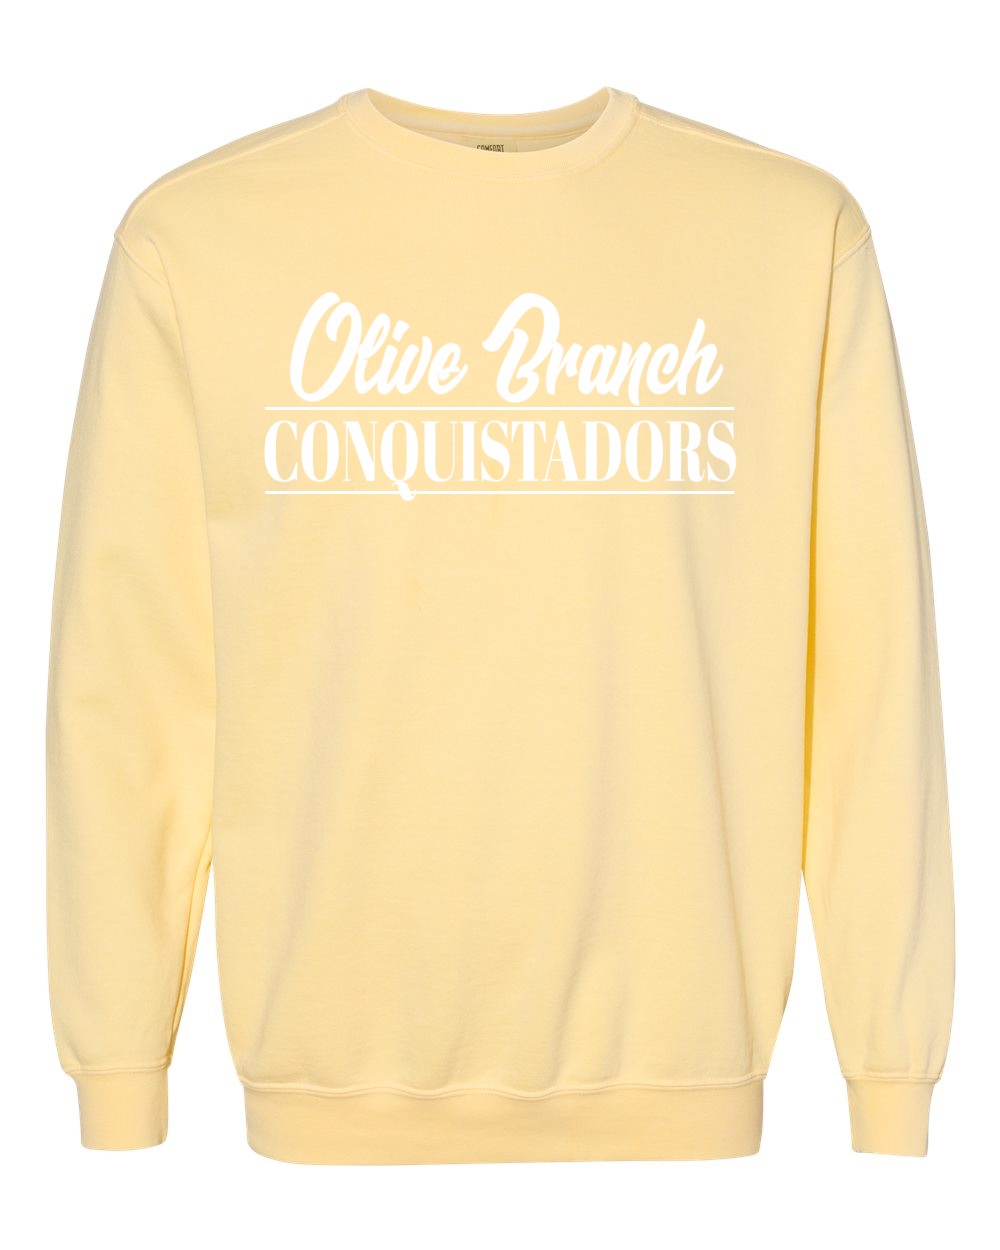 Olive Branch Conquistadors Comfort Colors Sweatshirts